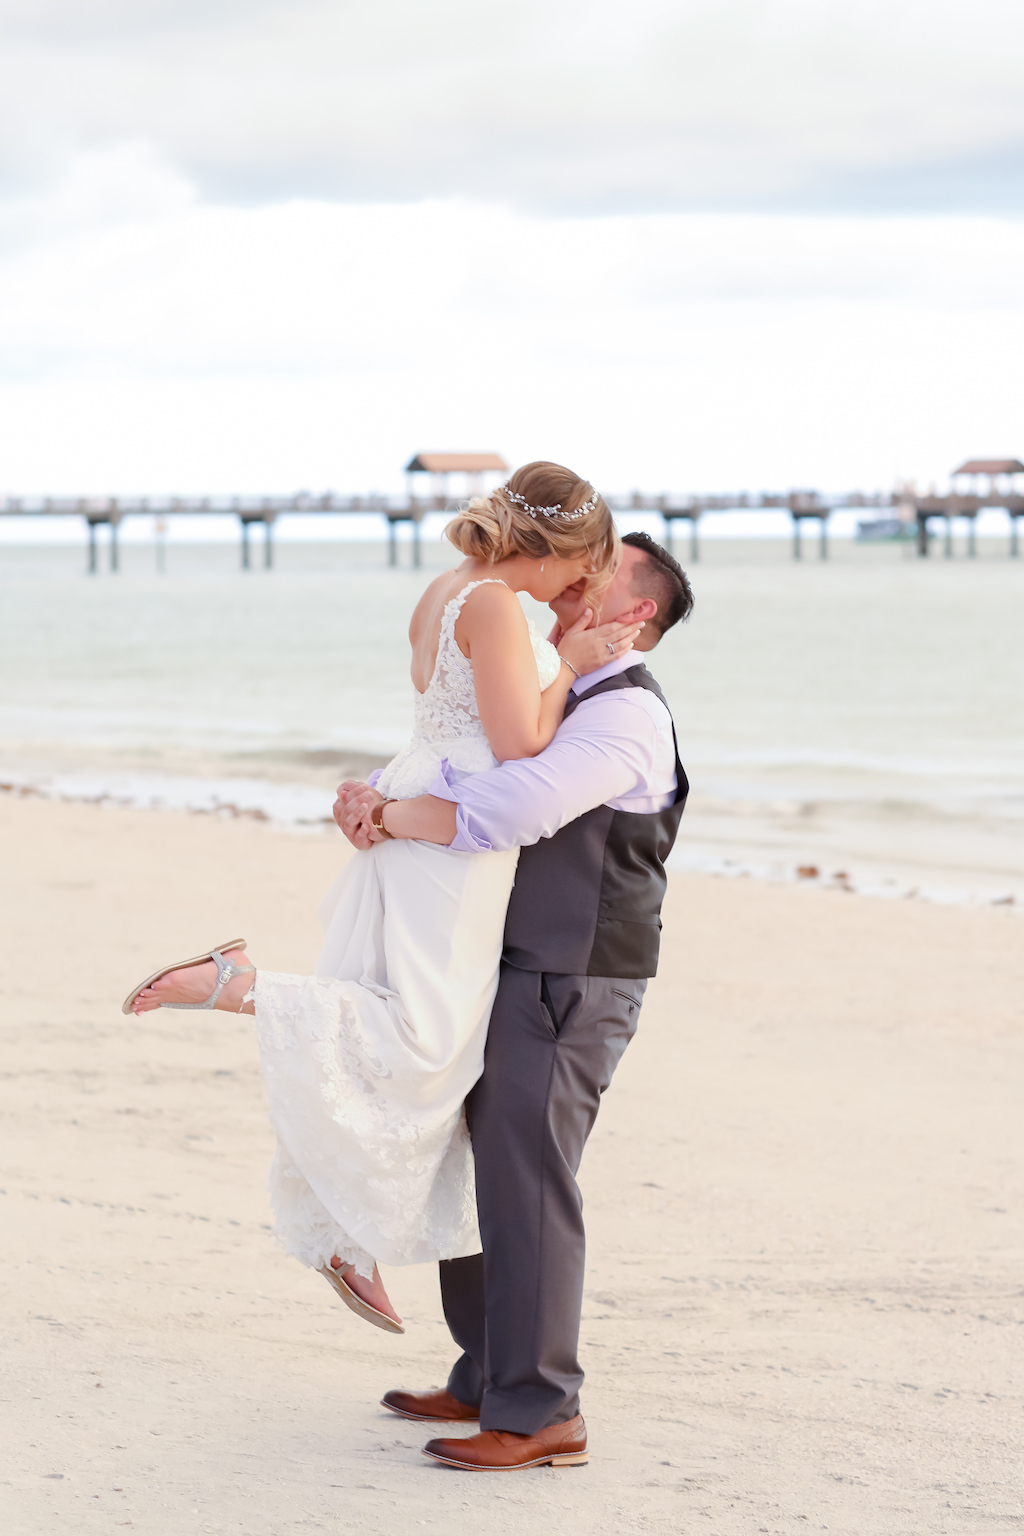 Intimate Beach Waterfront Bride and Groom Wedding Portrait | Tampa Bay Wedding Photographer Lifelong Photography Studios